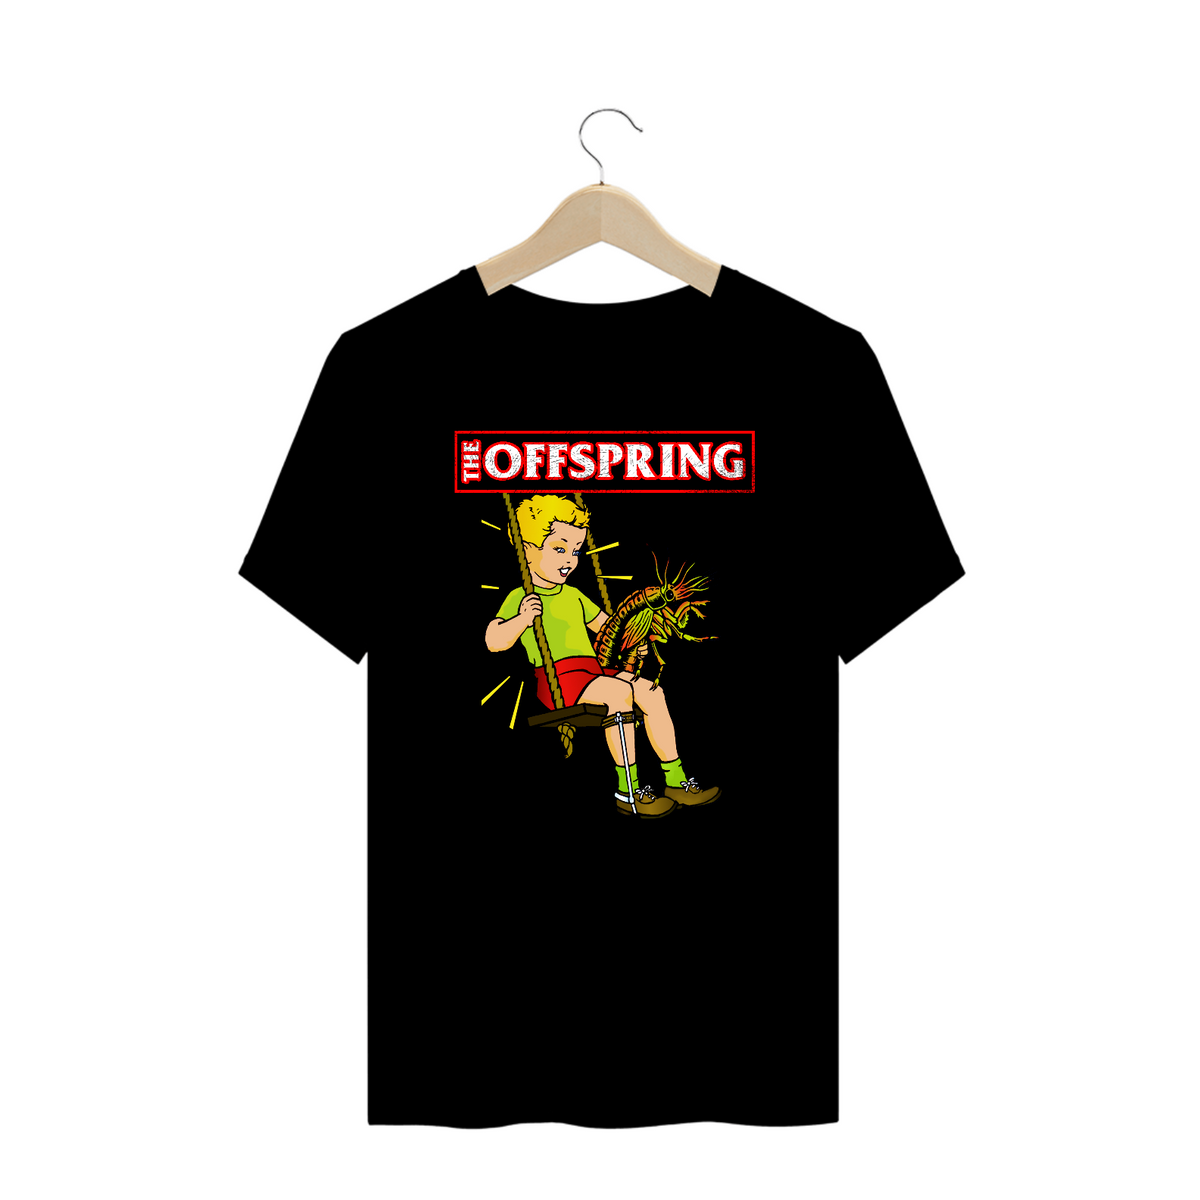 Nome do produto: The Offspring \